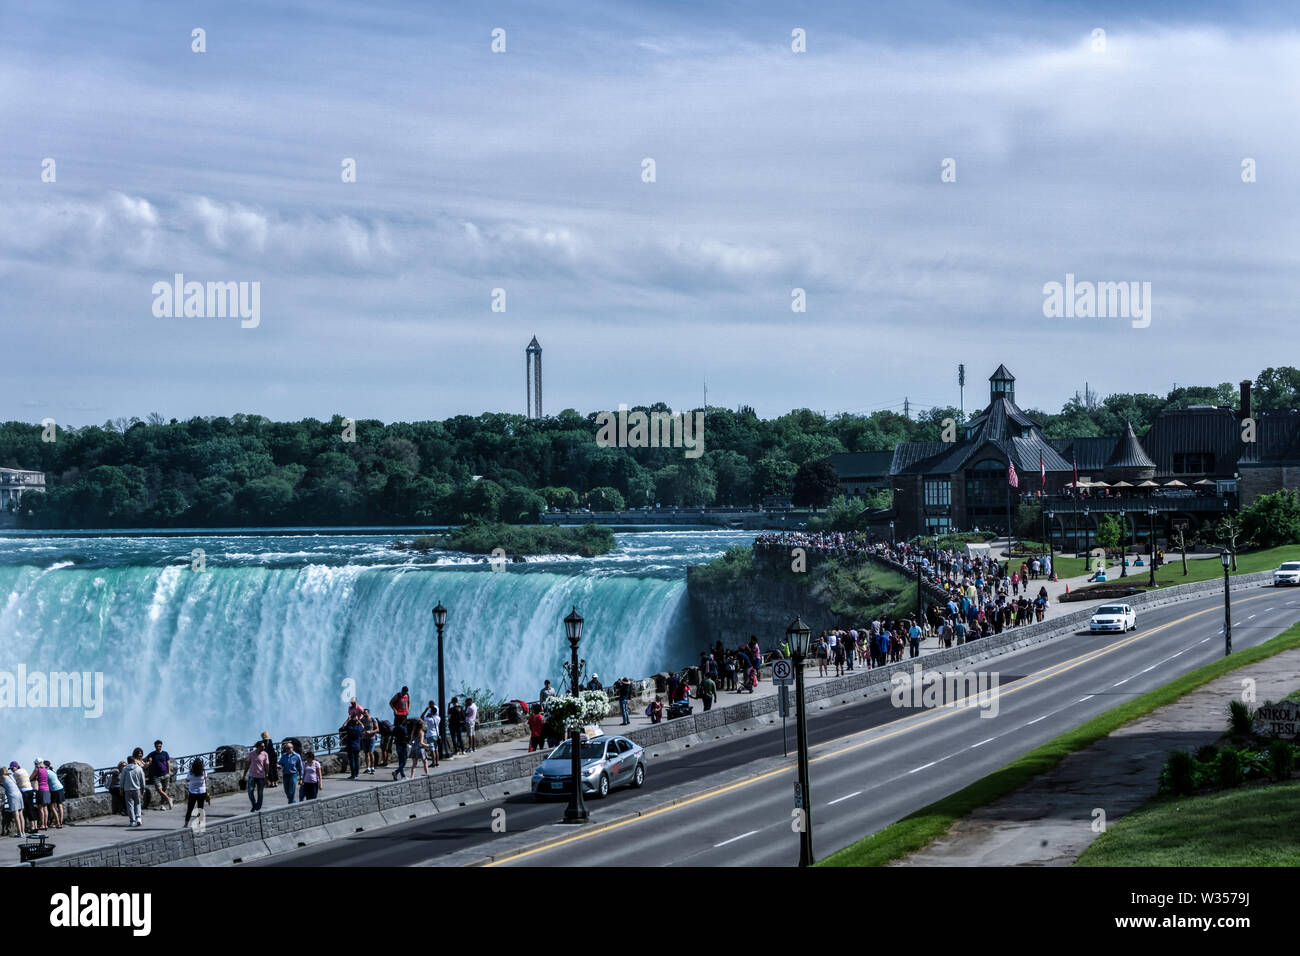 Canada Ontario Niagara Falls June 2019, many People are visiting the falls Stock Photo